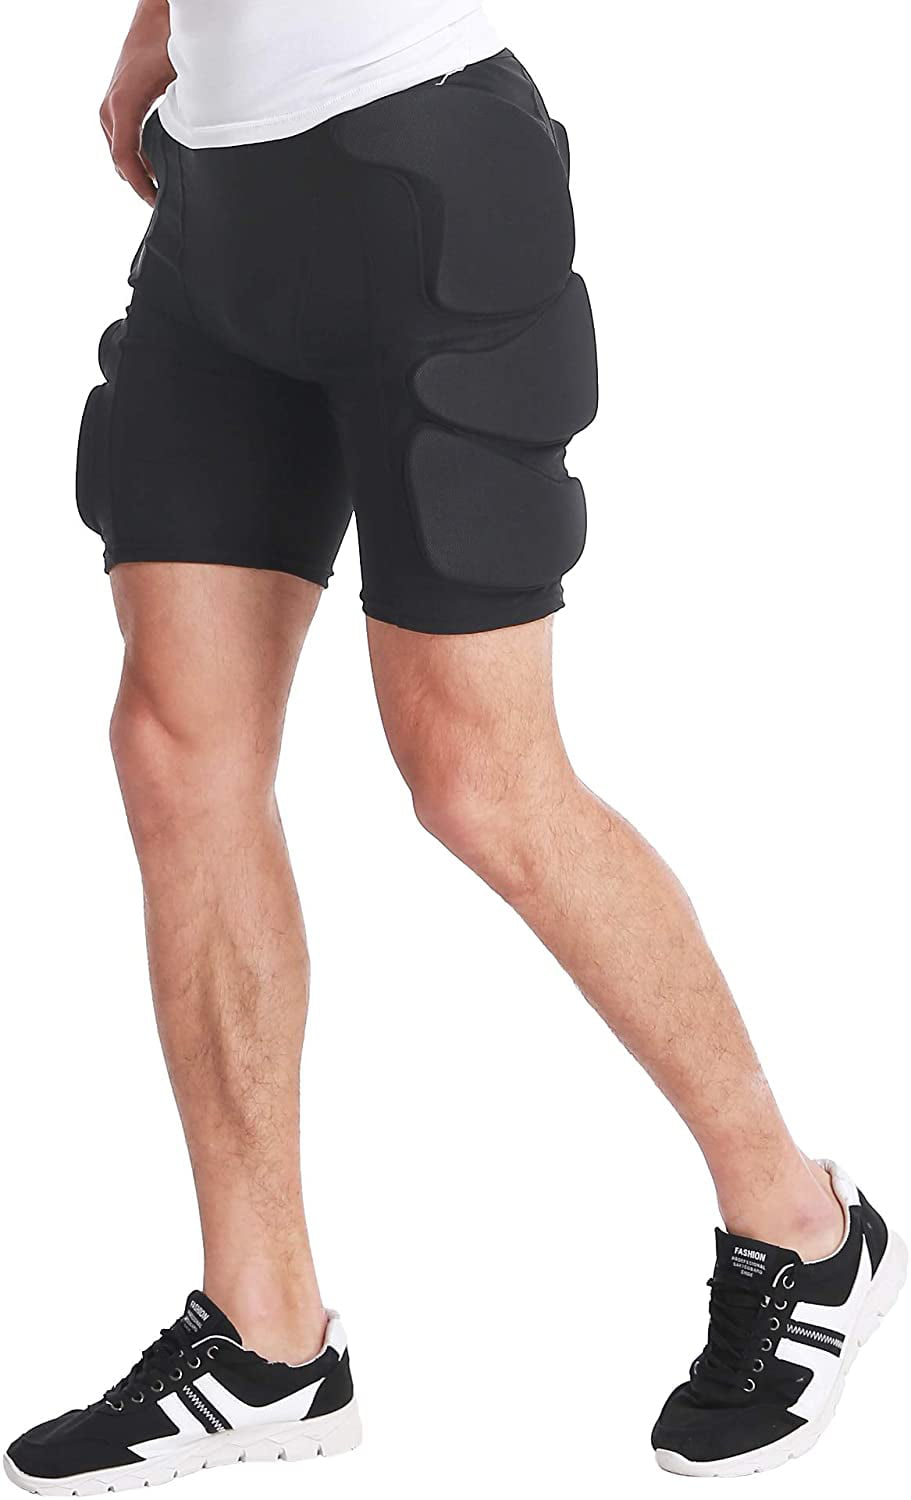 Men Sport Shorts Crash Pads Shorts Compression Short Pants Quick-dry Protector 